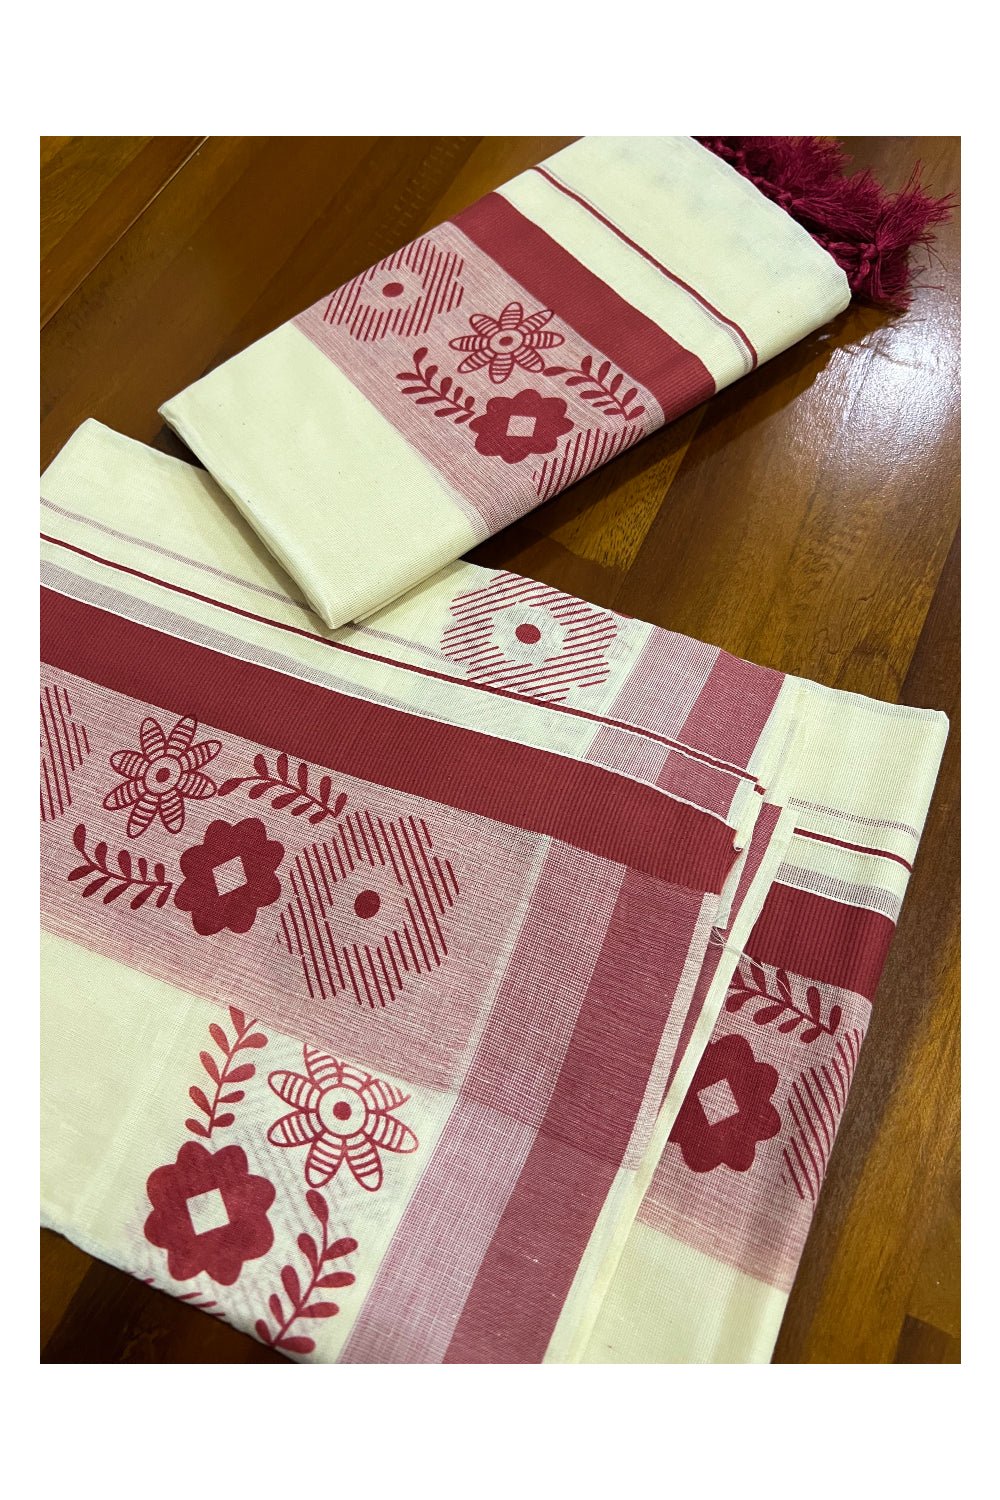 Kerala Cotton Mundum Neriyathum Single (Set Mundu) with Red Floral Block Print Border and Tassels Work